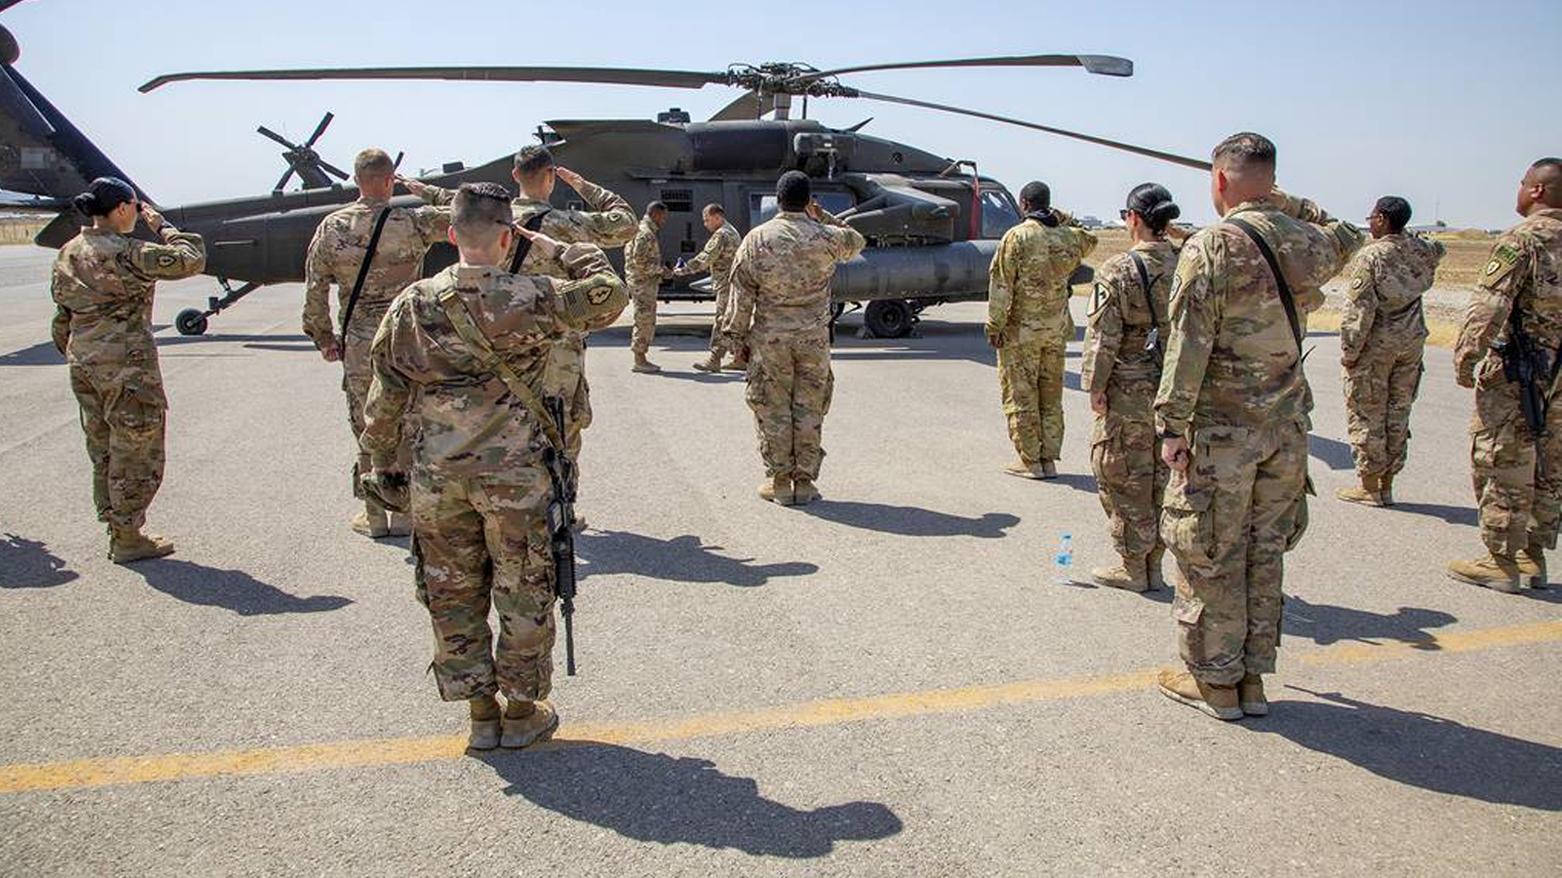 Two kamikaze drones downed at Erbil Coalition base, says Kurdish anti-terror group